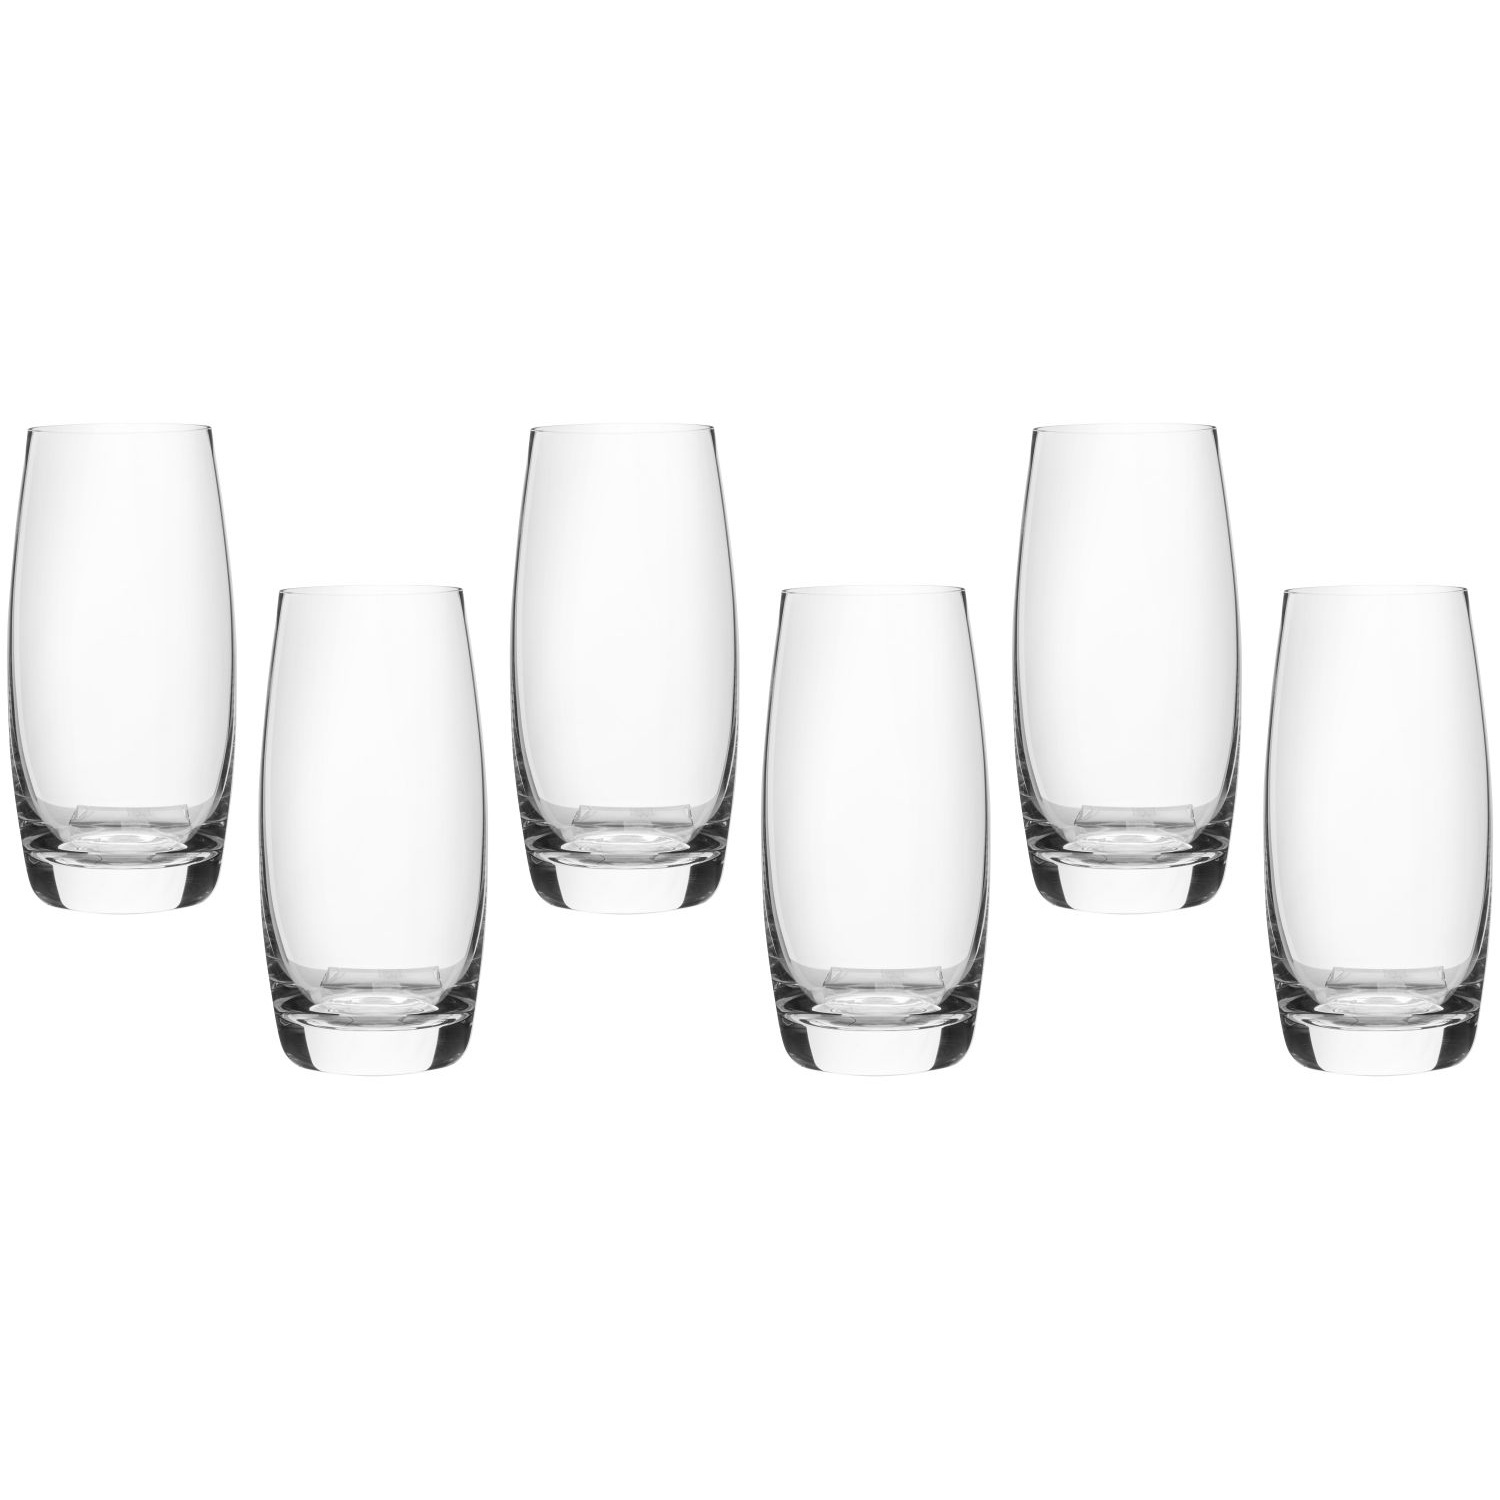 Набор стаканов Maxwell & Williams Cosmopolitan для воды 0,4 л набор стаканов bohemia jihlava a s glacier 350 мл 6 шт хрусталь